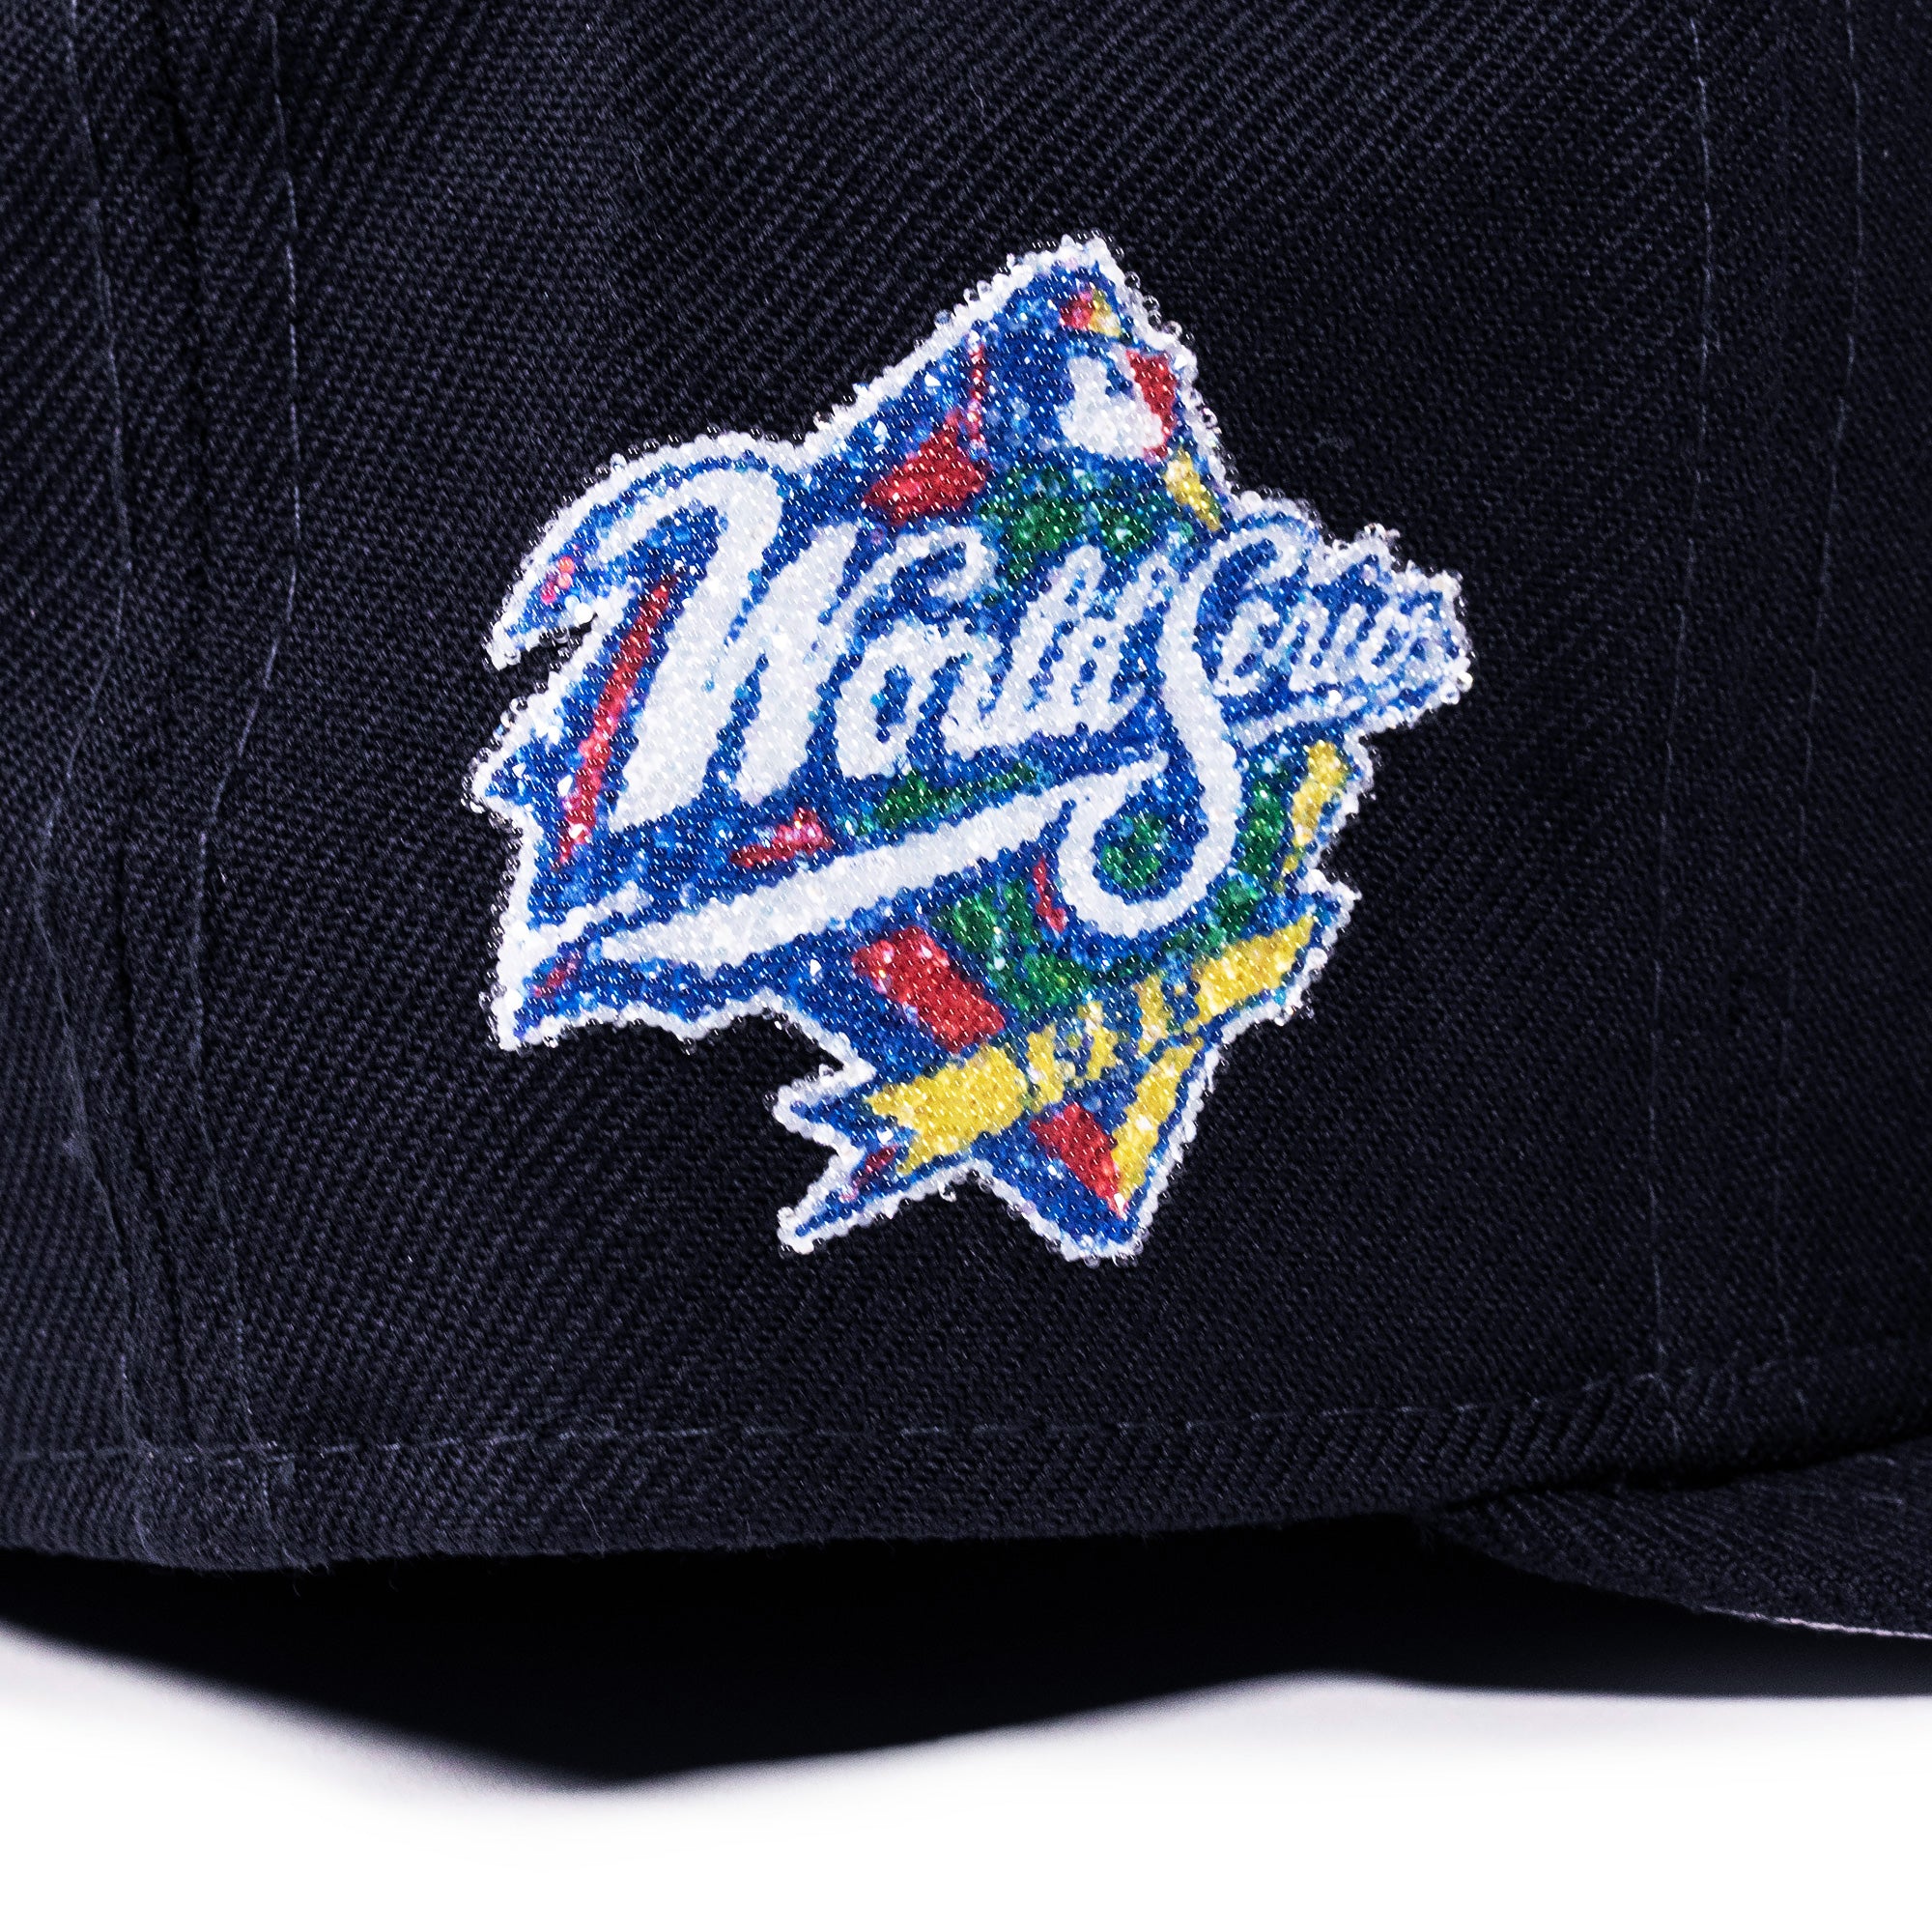 New Era x Swarovski Yankees Fitted 59FIFTY Hat [12107938] - 7